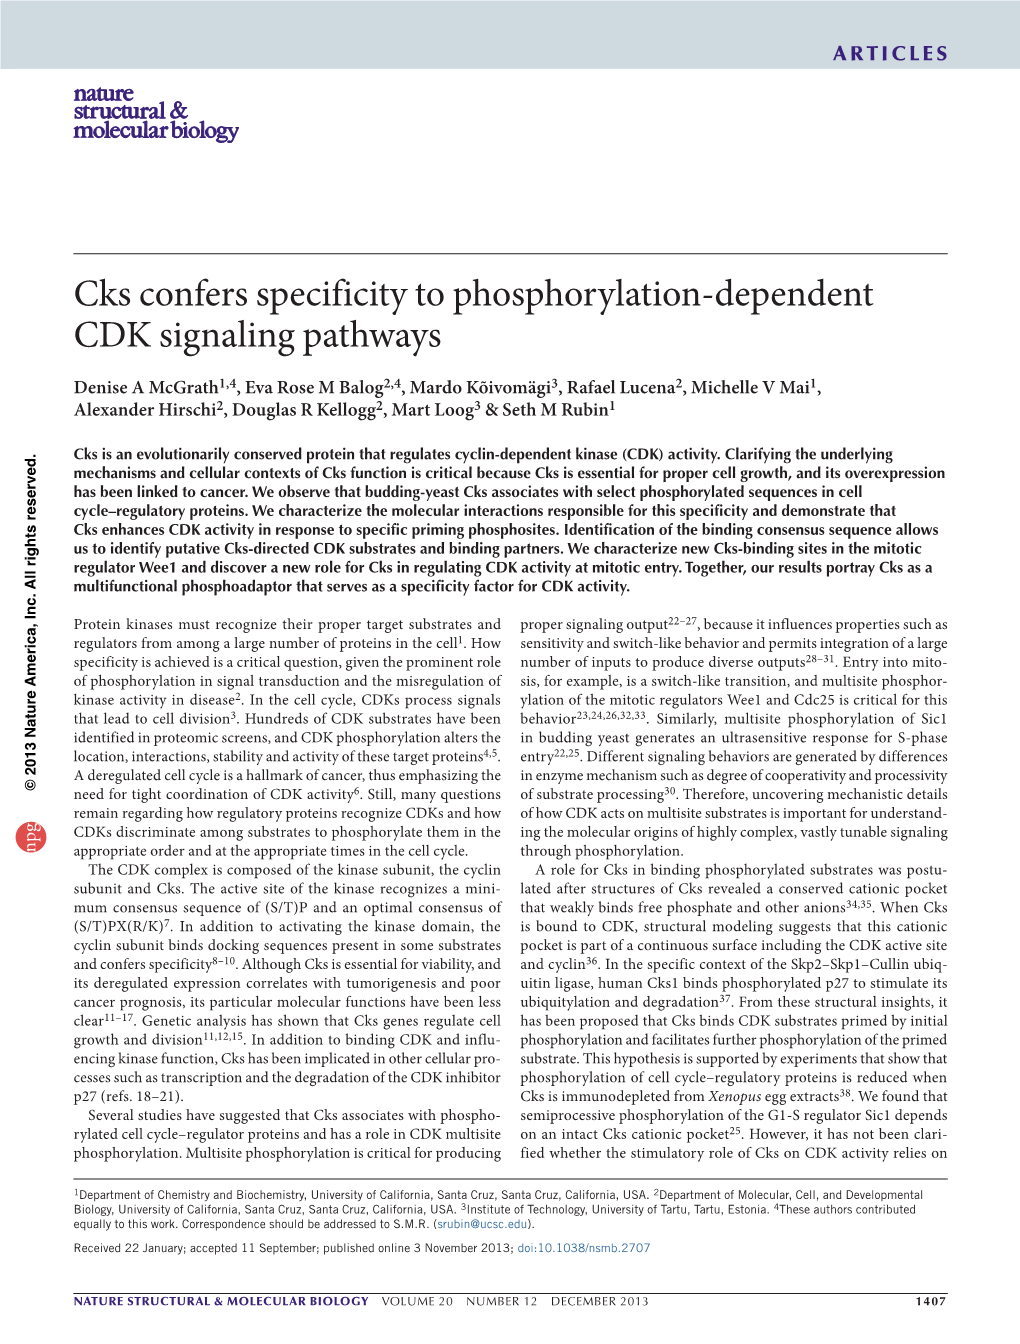 Cks Confers Specificity to Phosphorylation-Dependent CDK Signaling Pathways